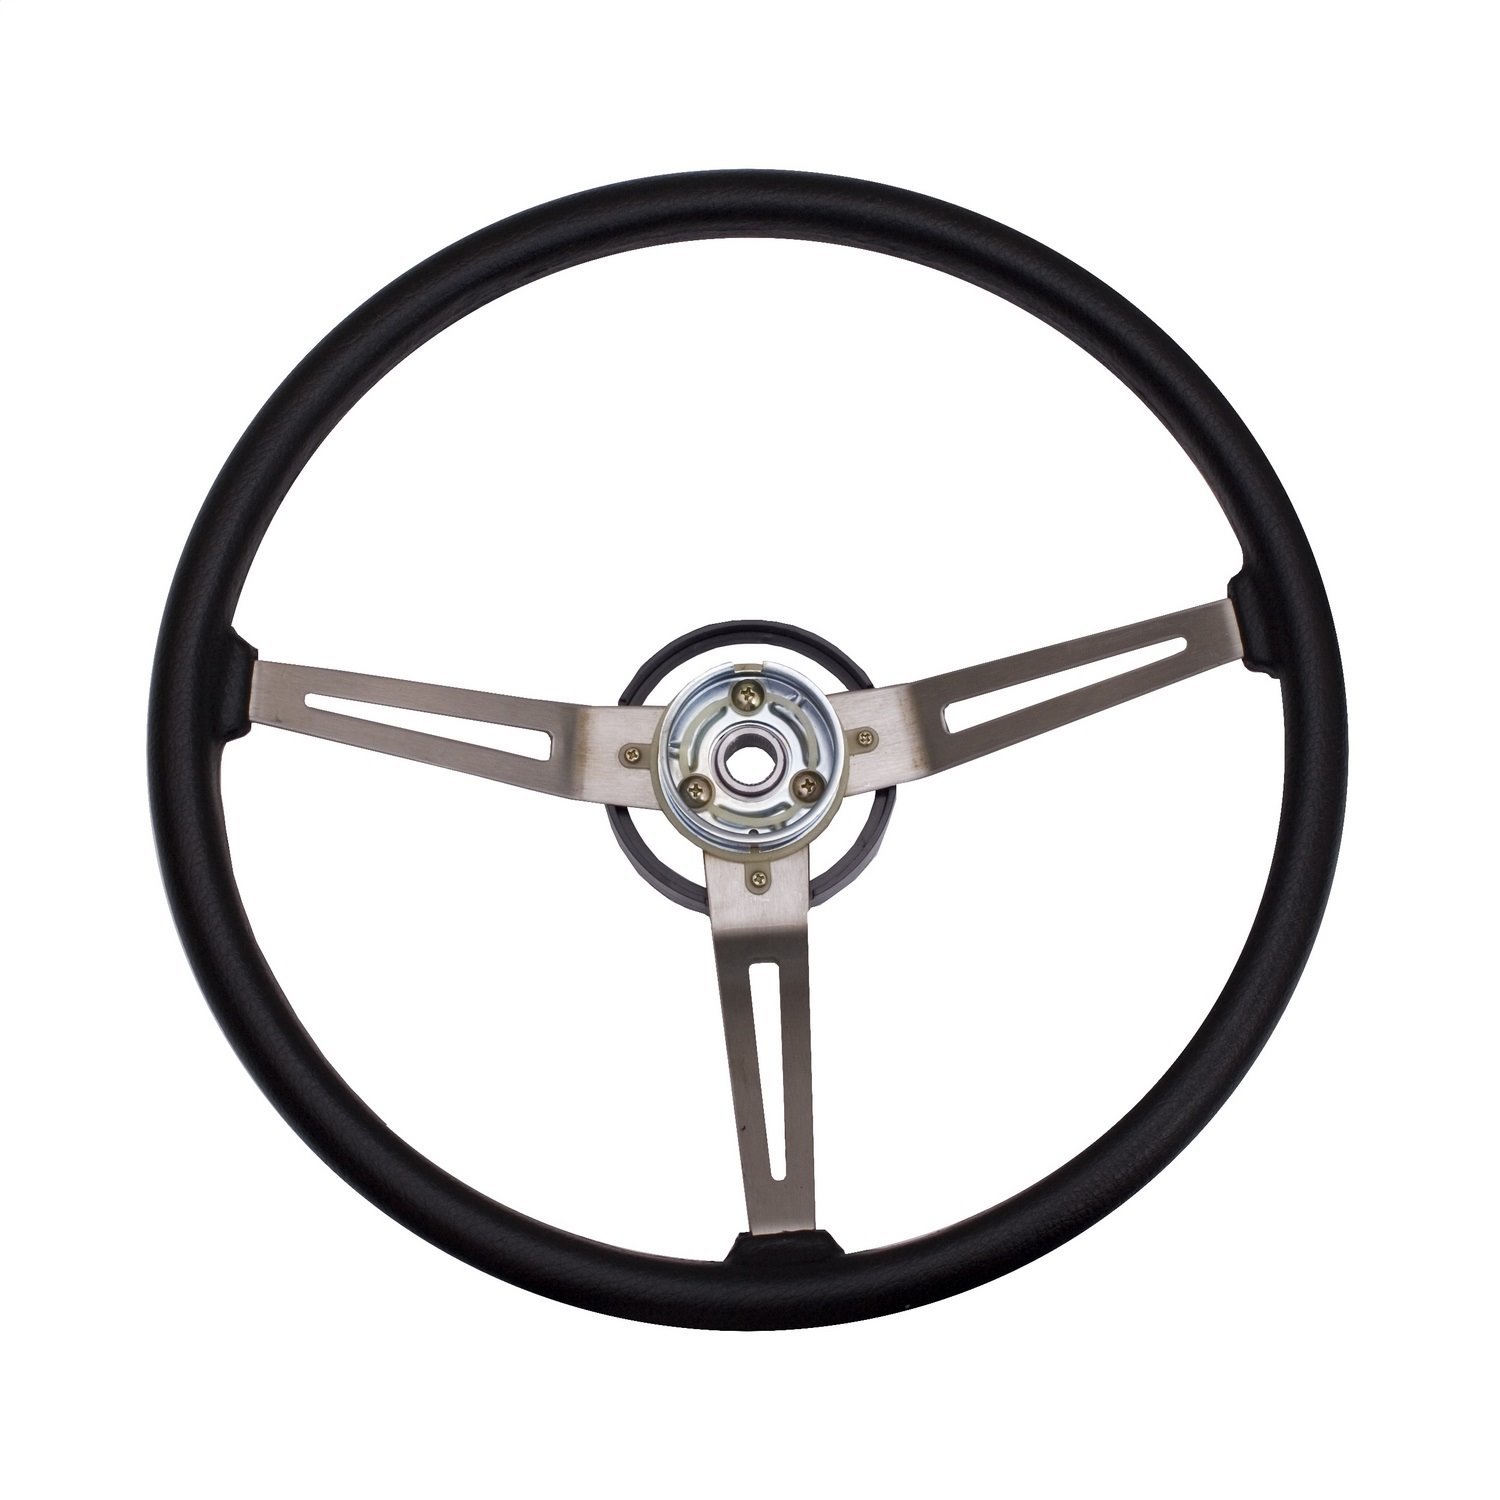 This black vinyl steering wheel from Omix-ADA fits